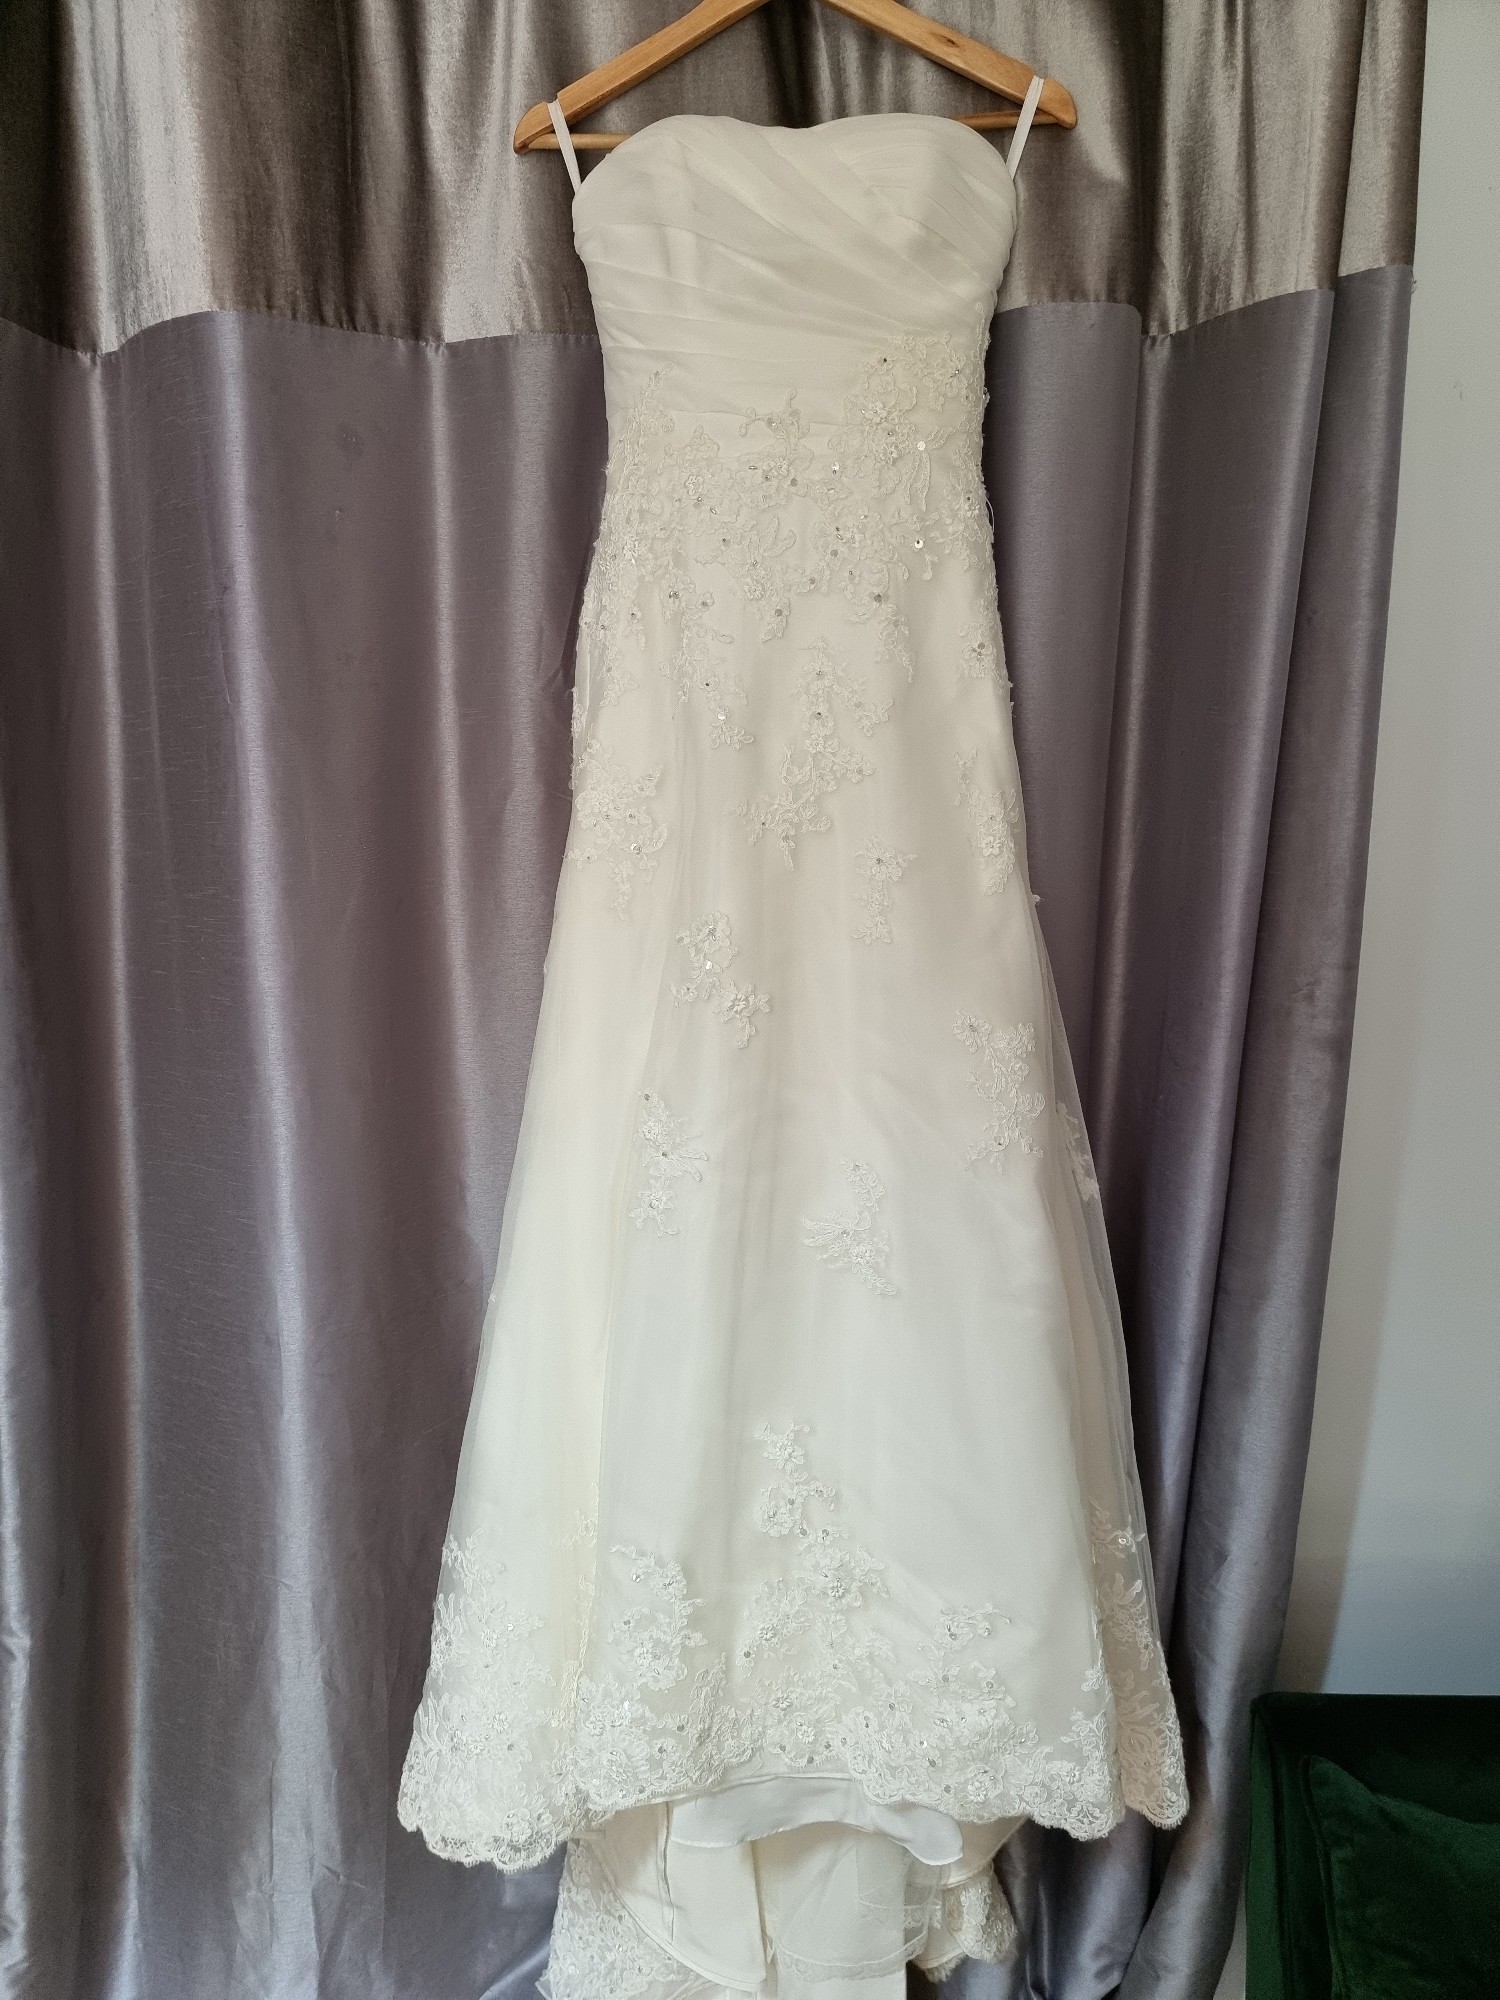 Tia Adora Preloved Wedding Dress Save 91% - Stillwhite